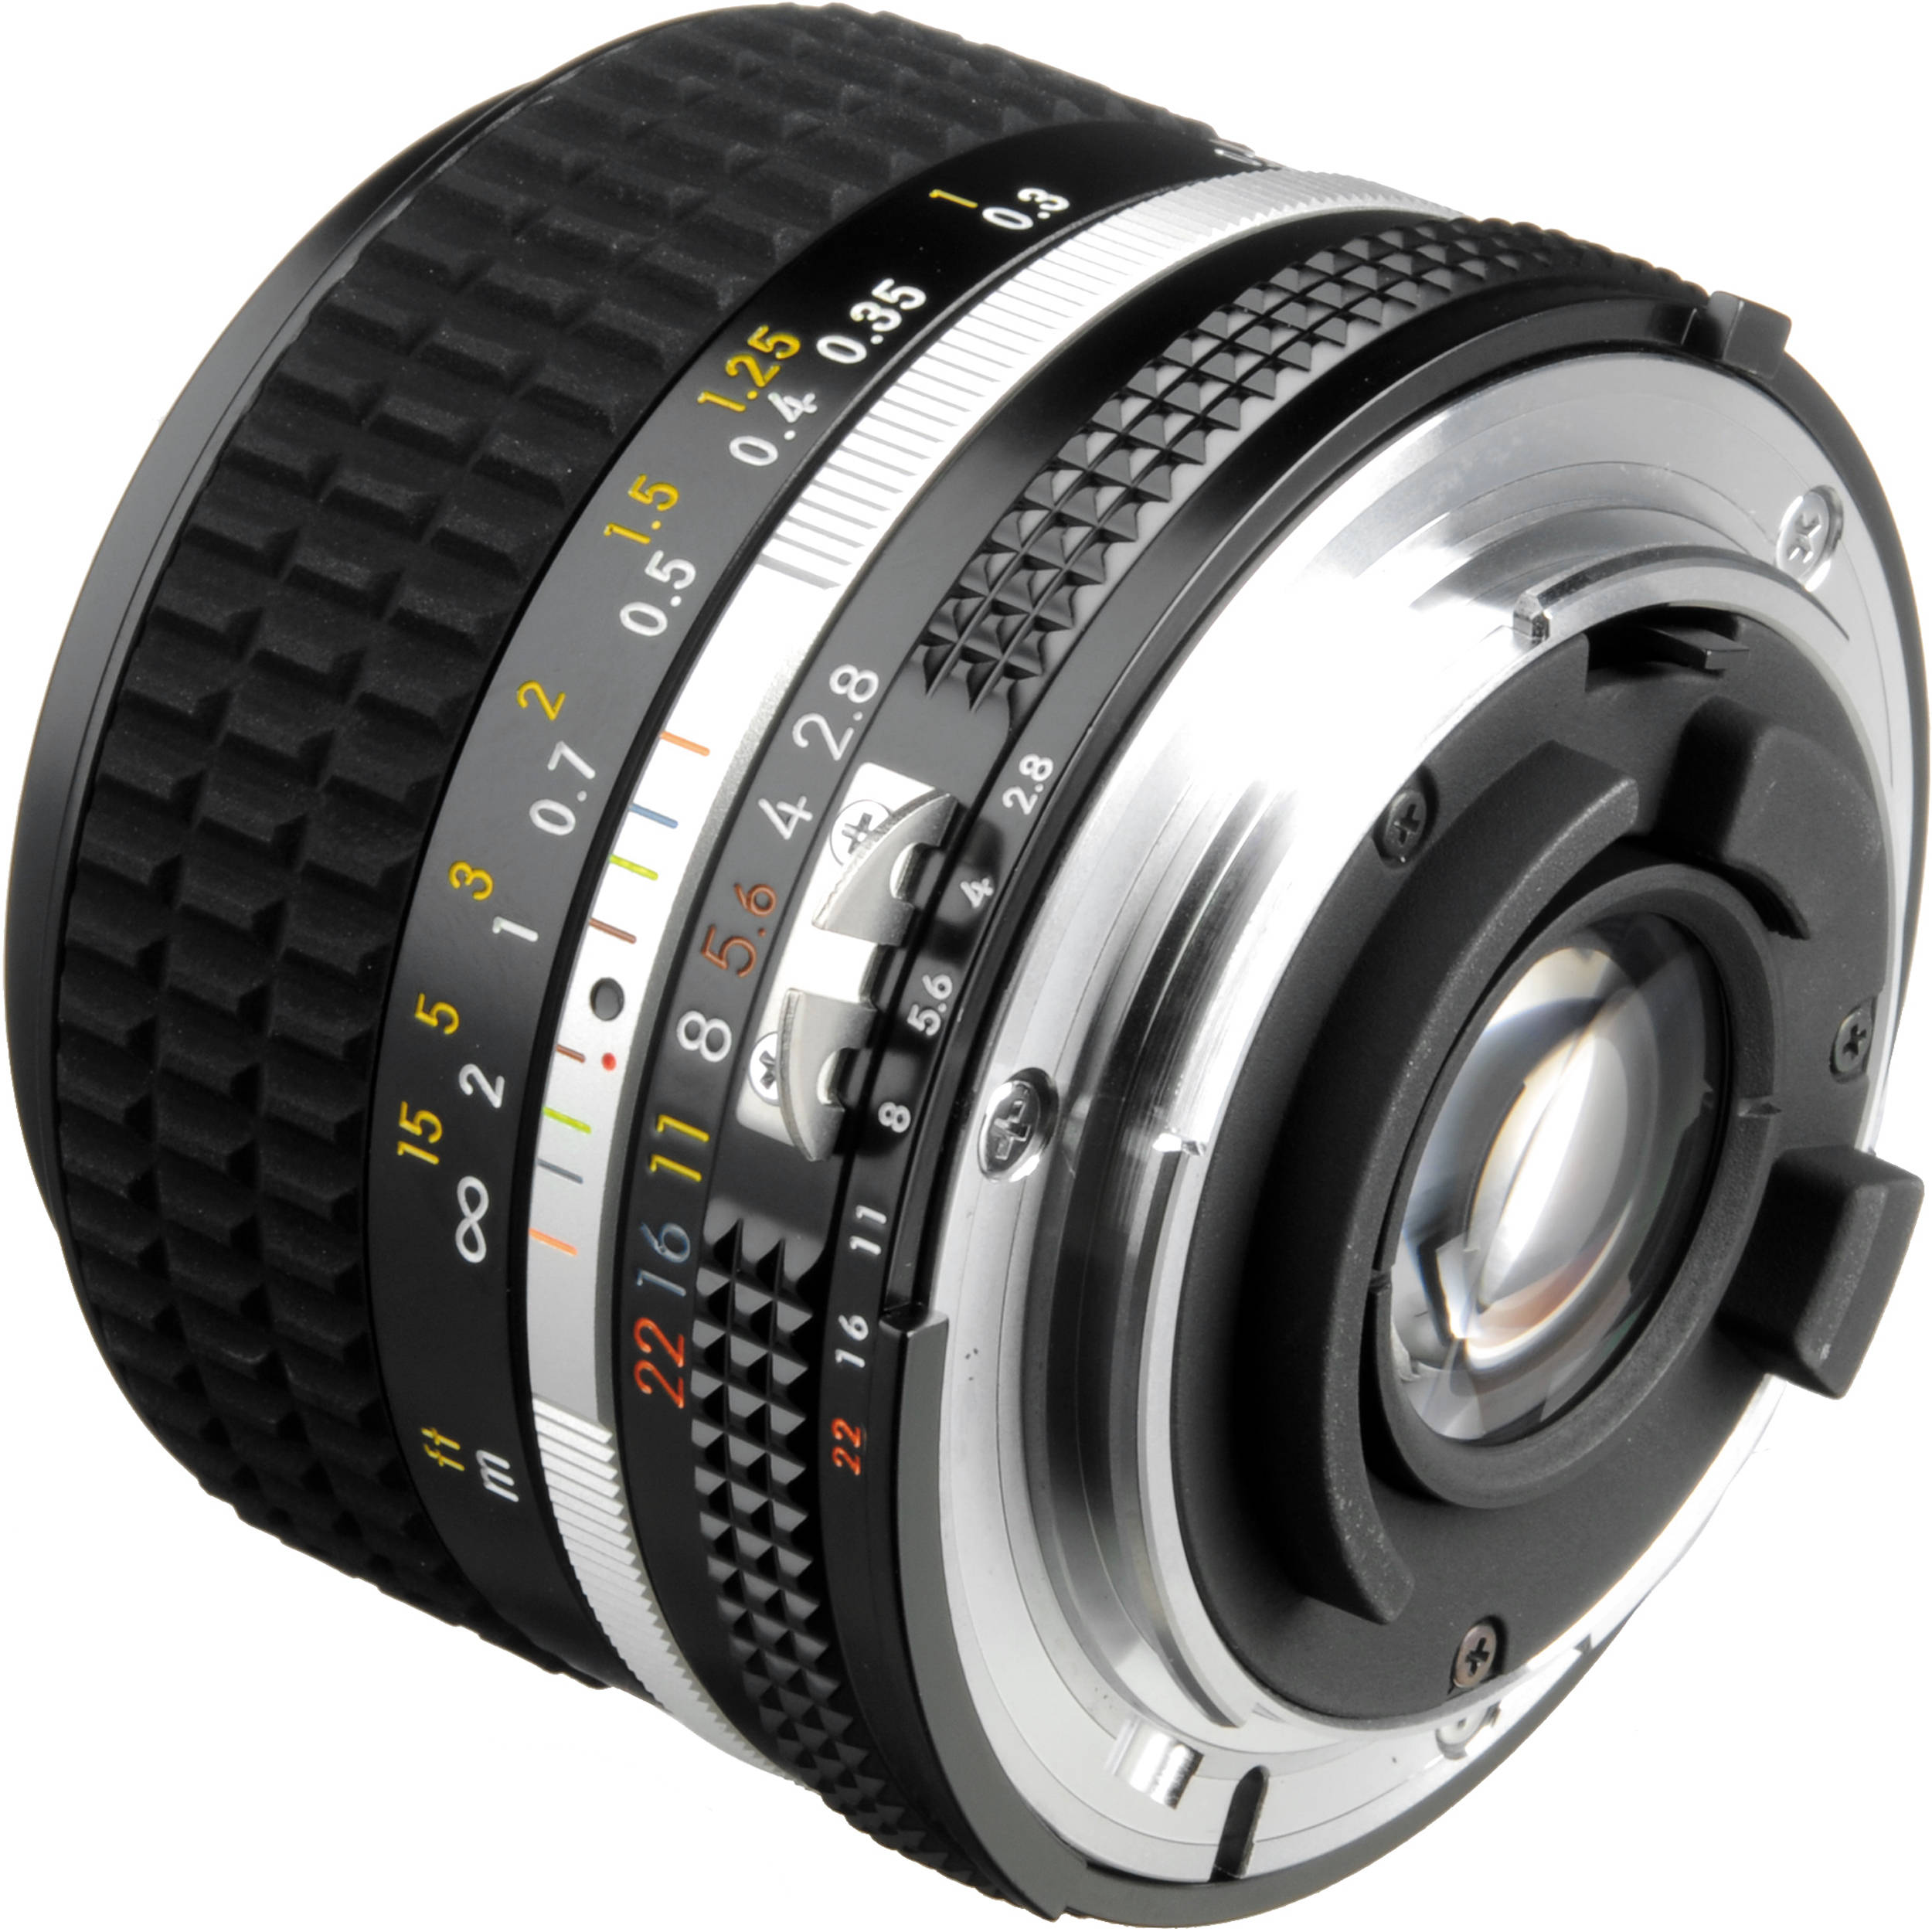 Nikon Nikkor 28mm F 2 8 Lens 14 B H Photo Video